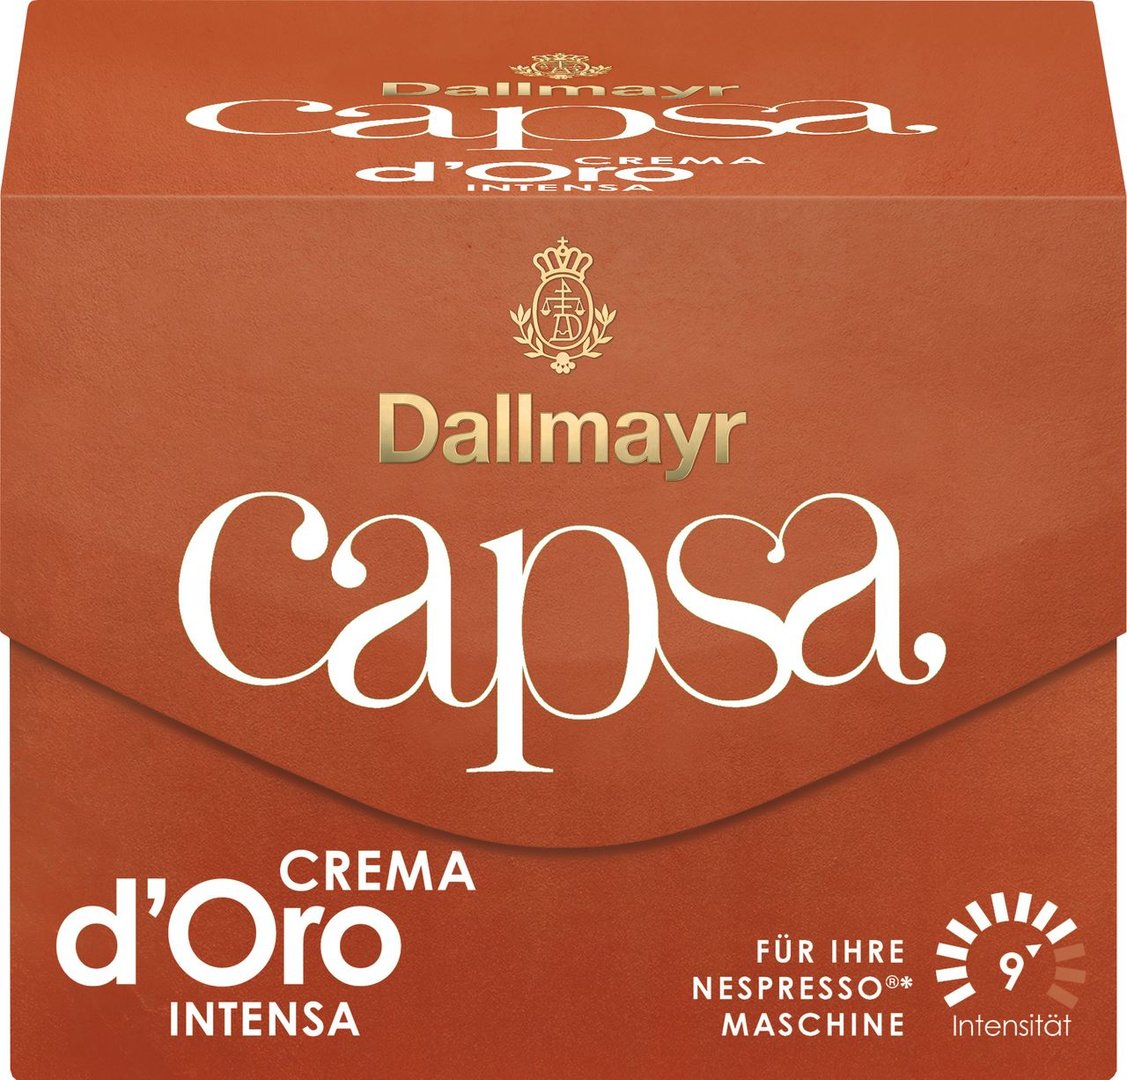 Dallmayr - Capsa 10 Stk. Crema d'Oro Intensa - 56 g Paket